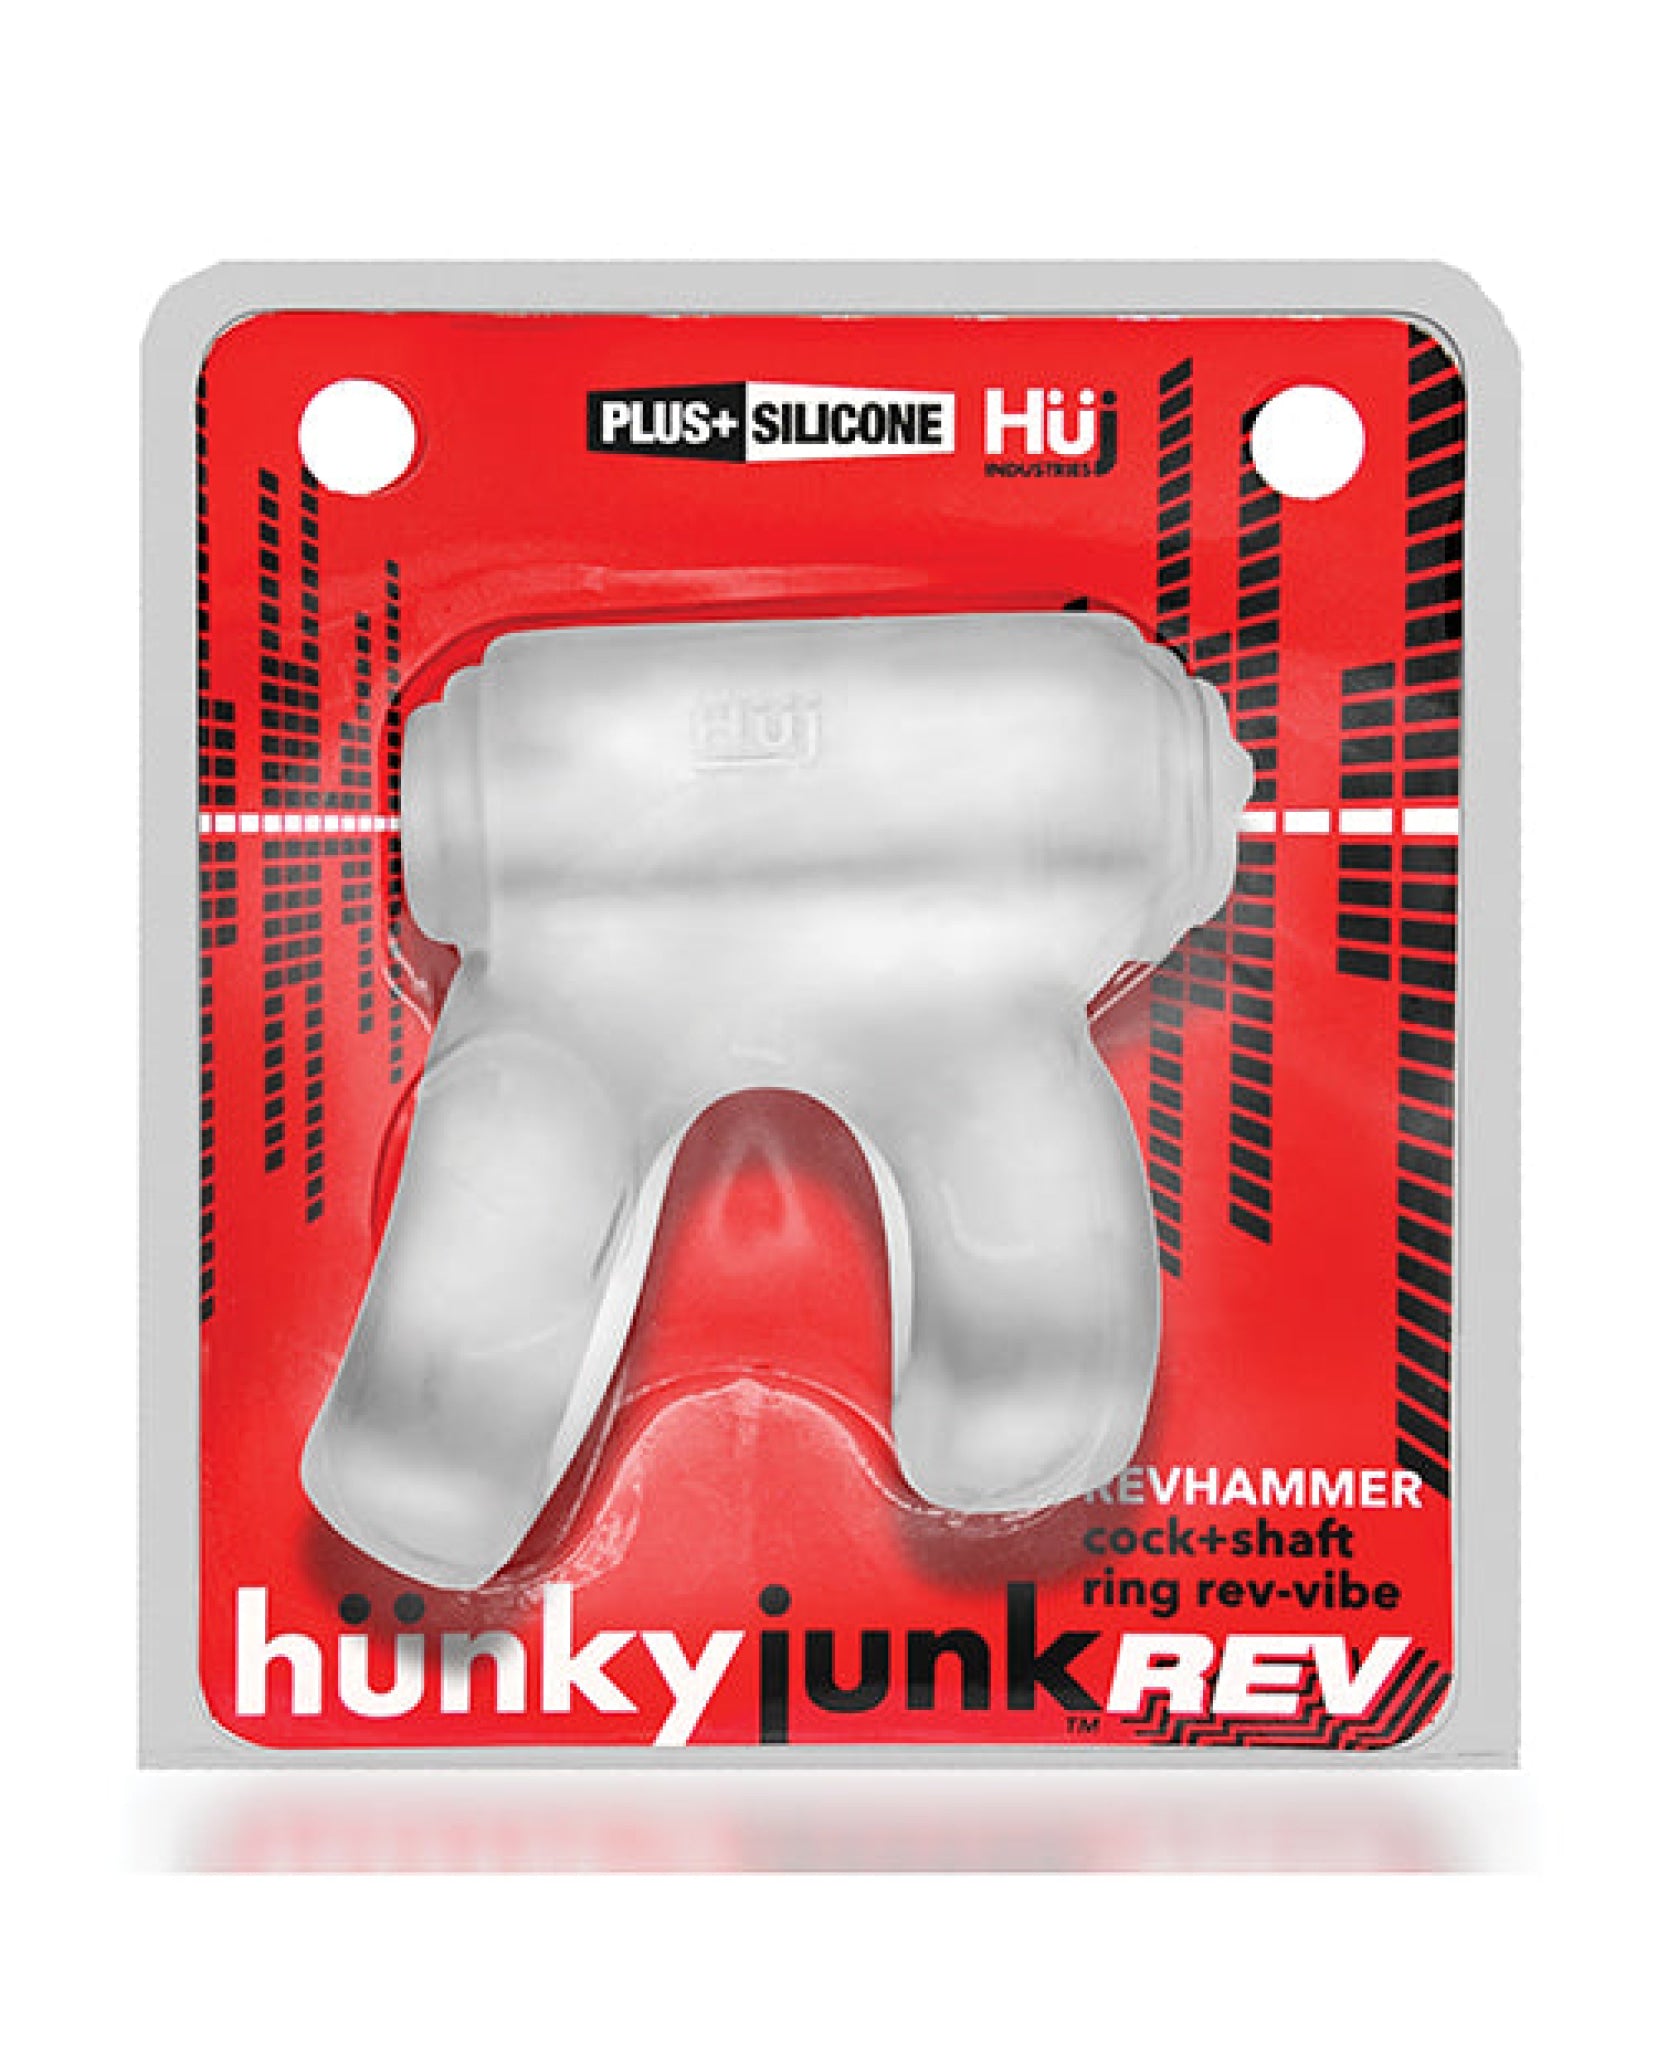 Hunkyjunk Revhammer Shaft Vibe Ring - Vibe Hunky Junk